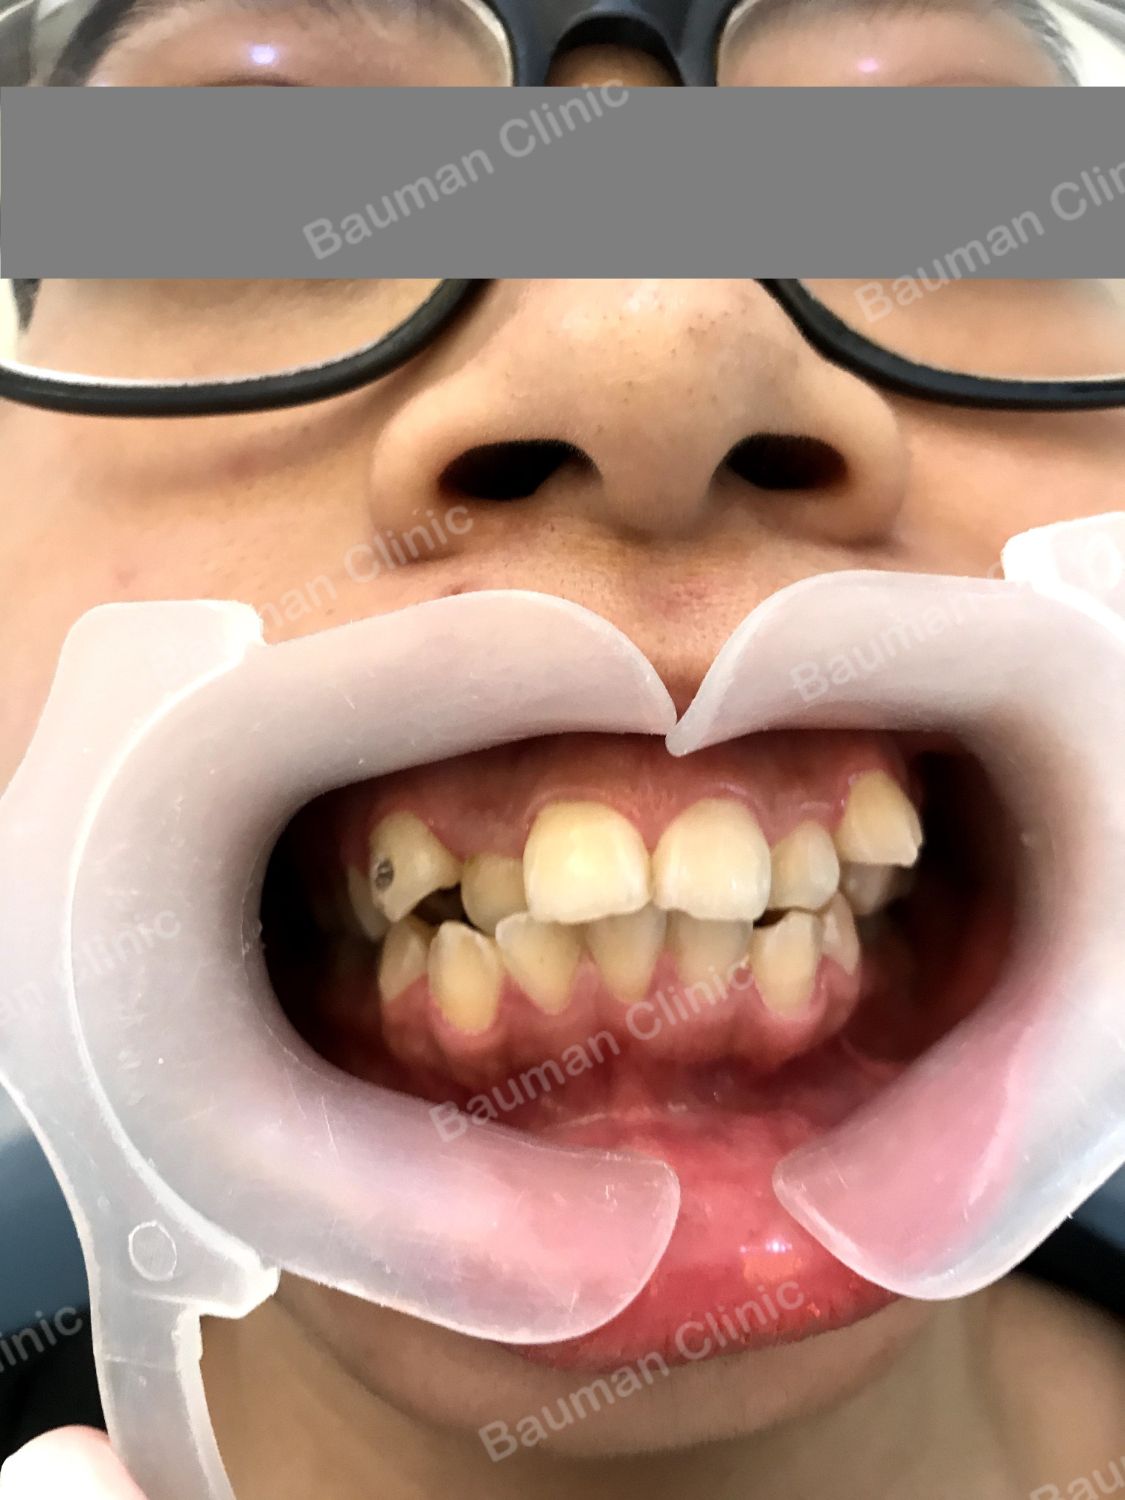 Ca niềng răng số 5013 - Nha khoa Bauman Clinic